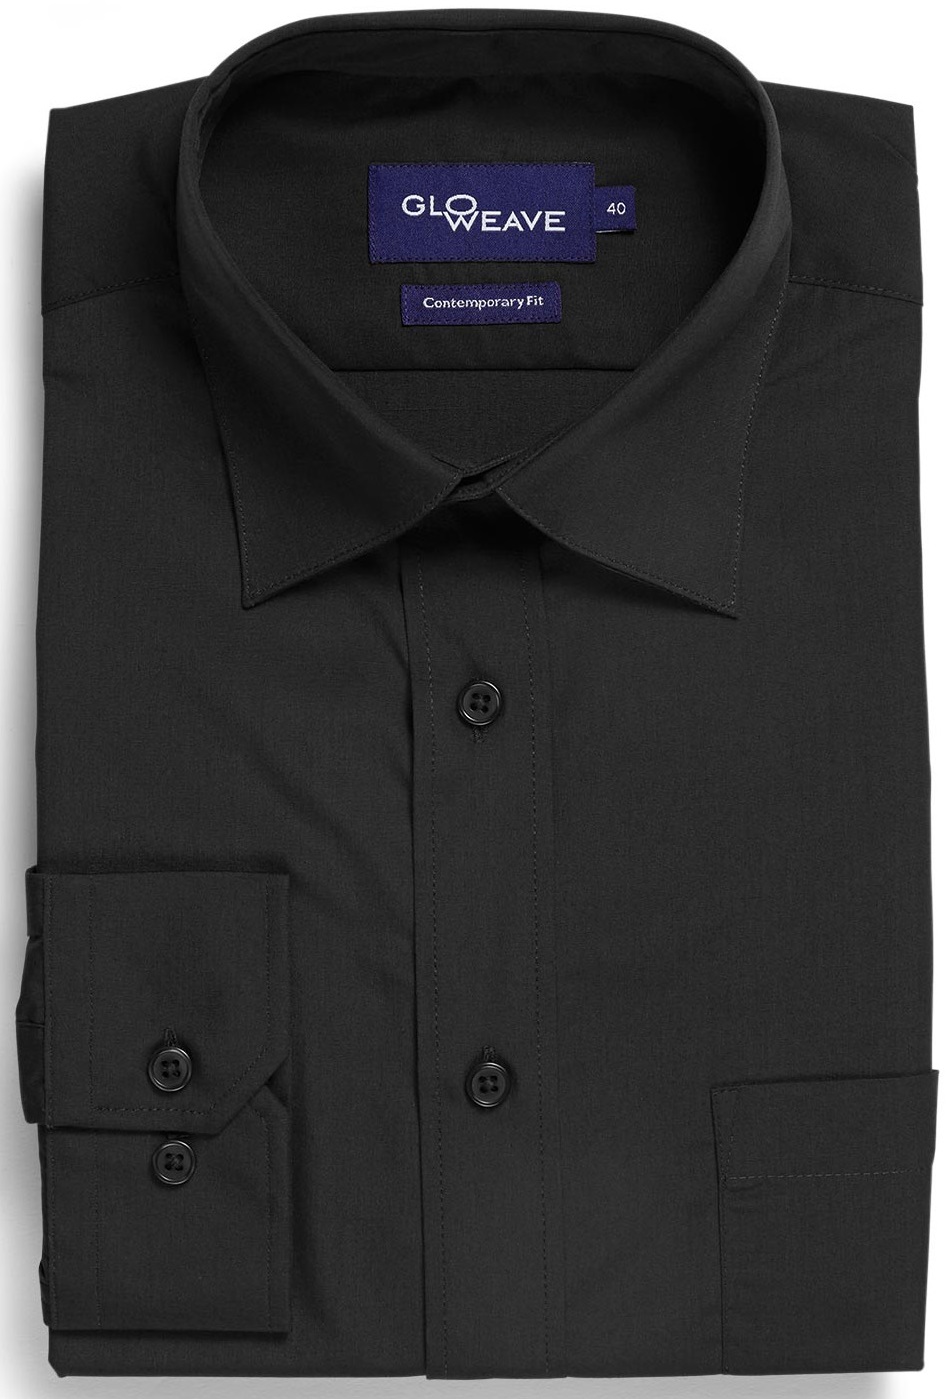 Gloweave Black Shirt Special - Business Shirts Plus Online